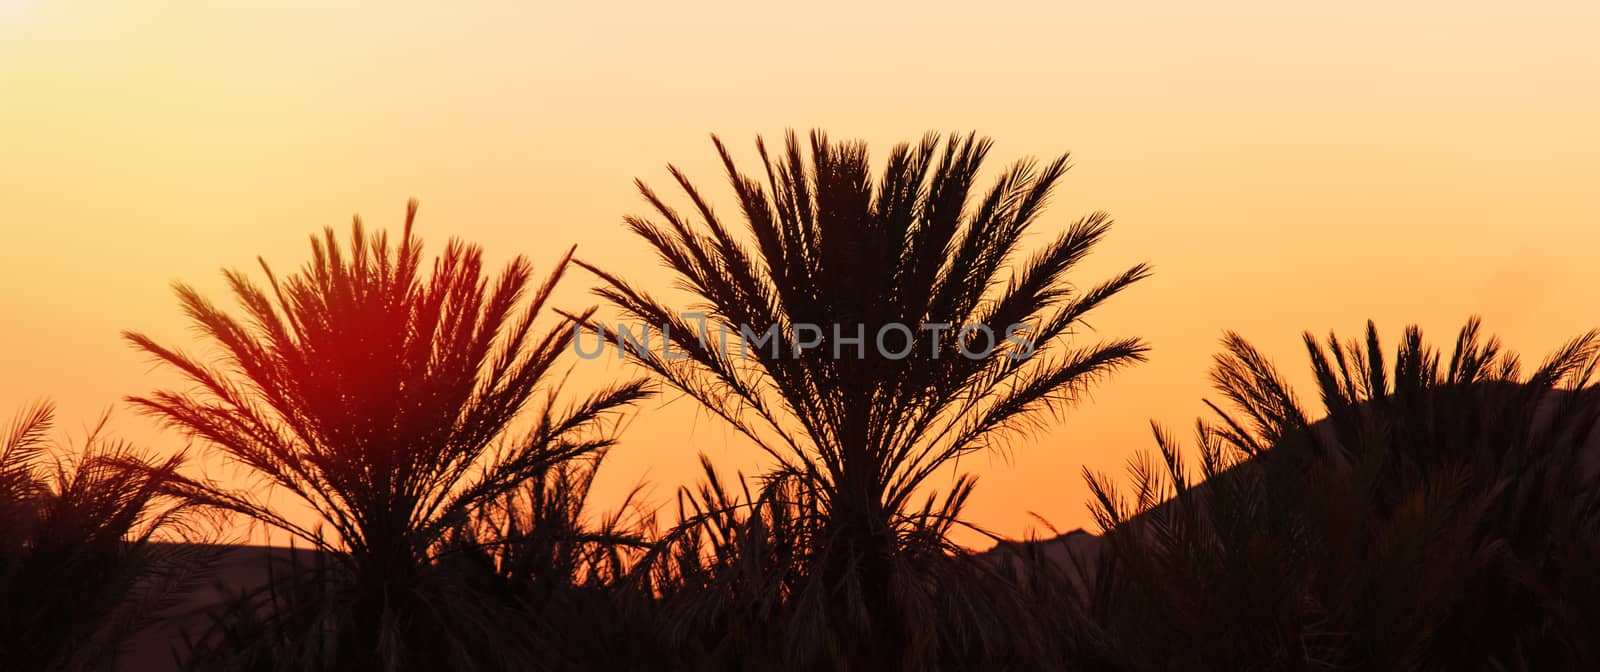 beautiful panoramic orange sunset between palm trees in morocco by pixinoo